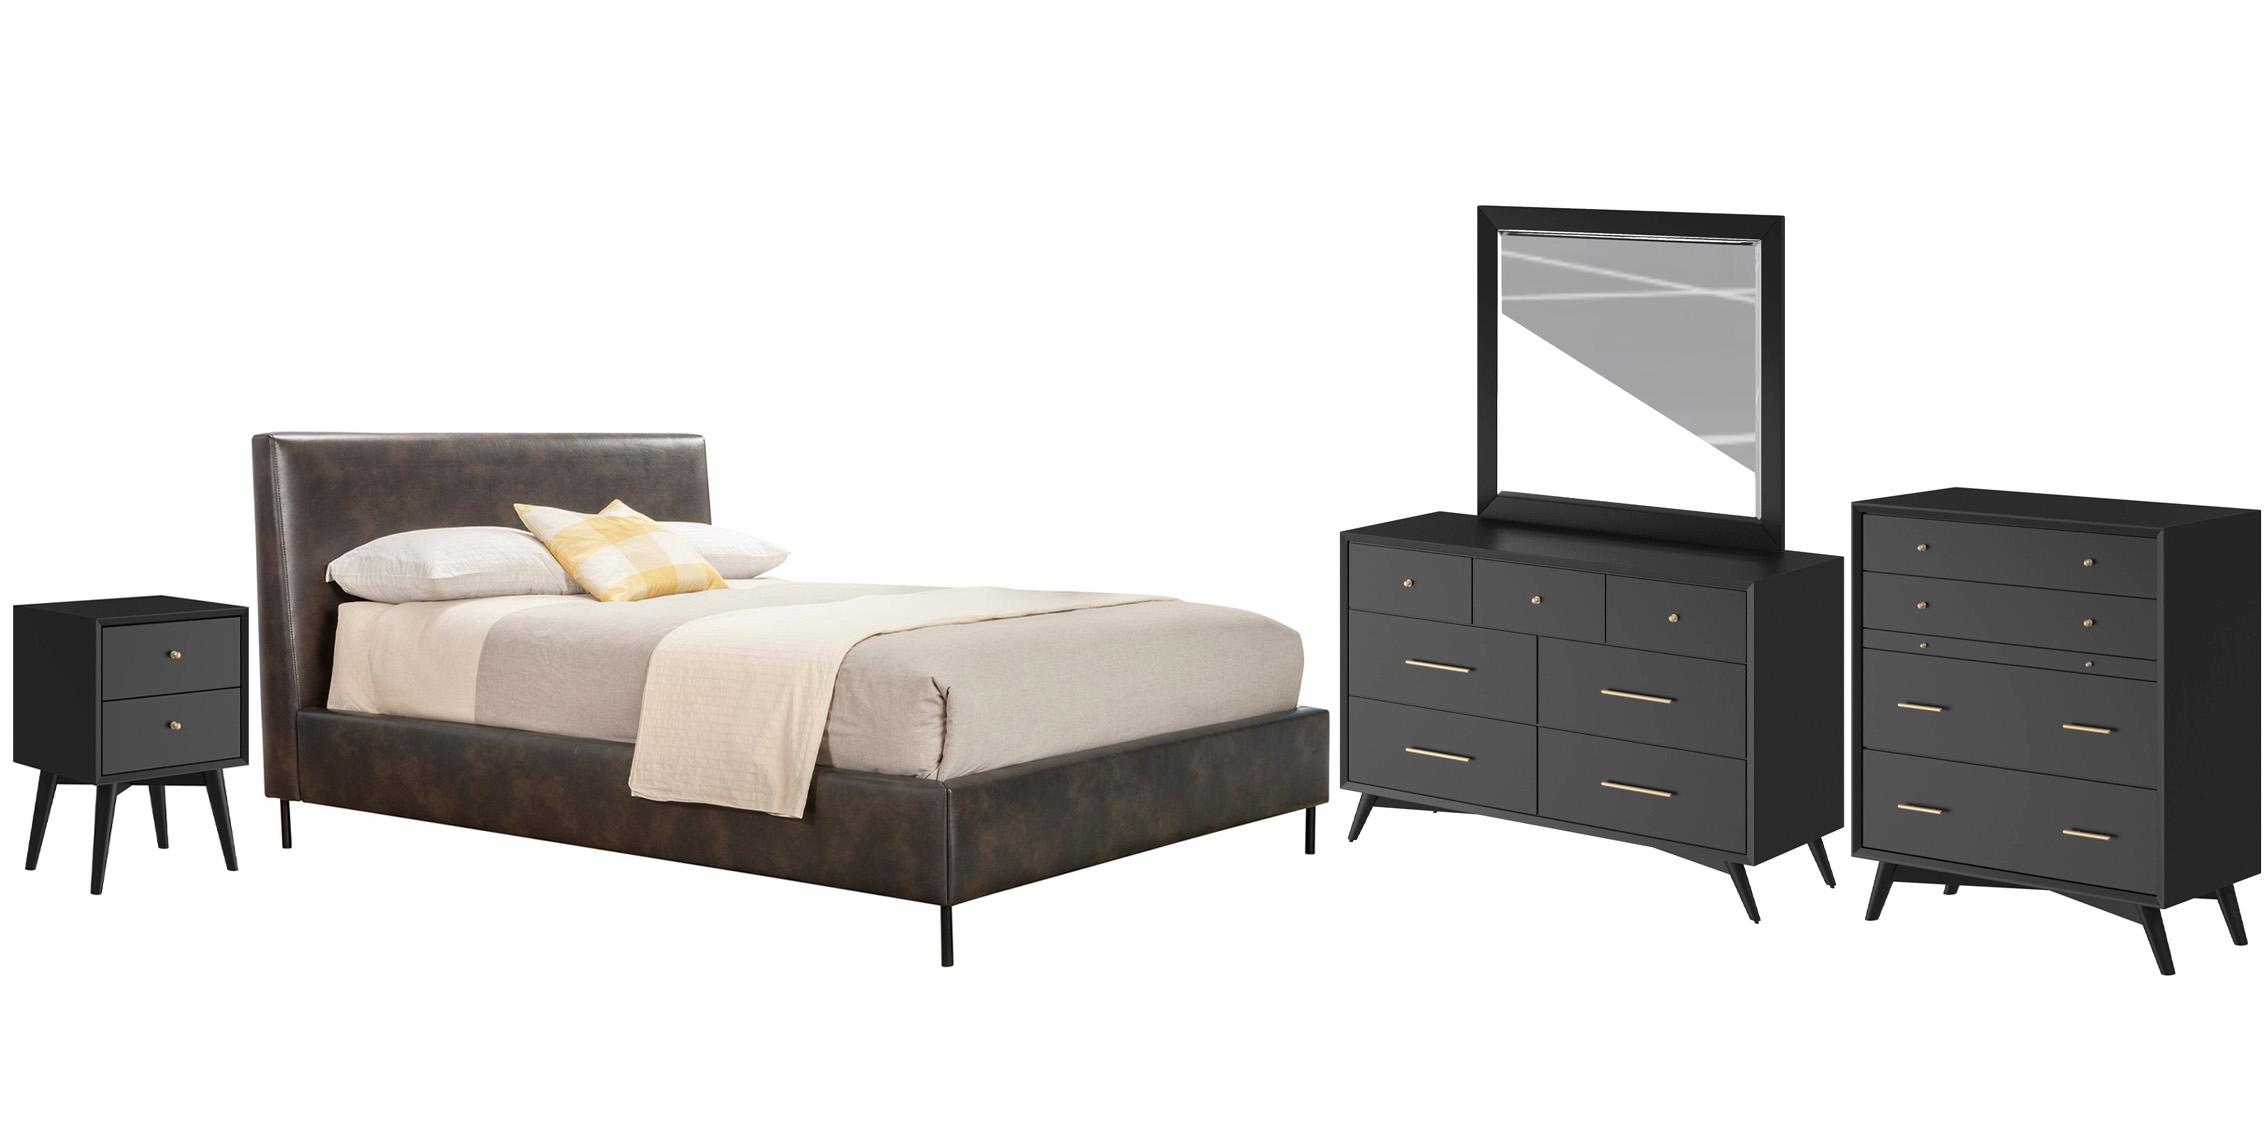 Modern Platform Bedroom Set SOPHIA / FLYNN 6902CK-GRY-Set-5-BLK in Gray, Black Faux Leather